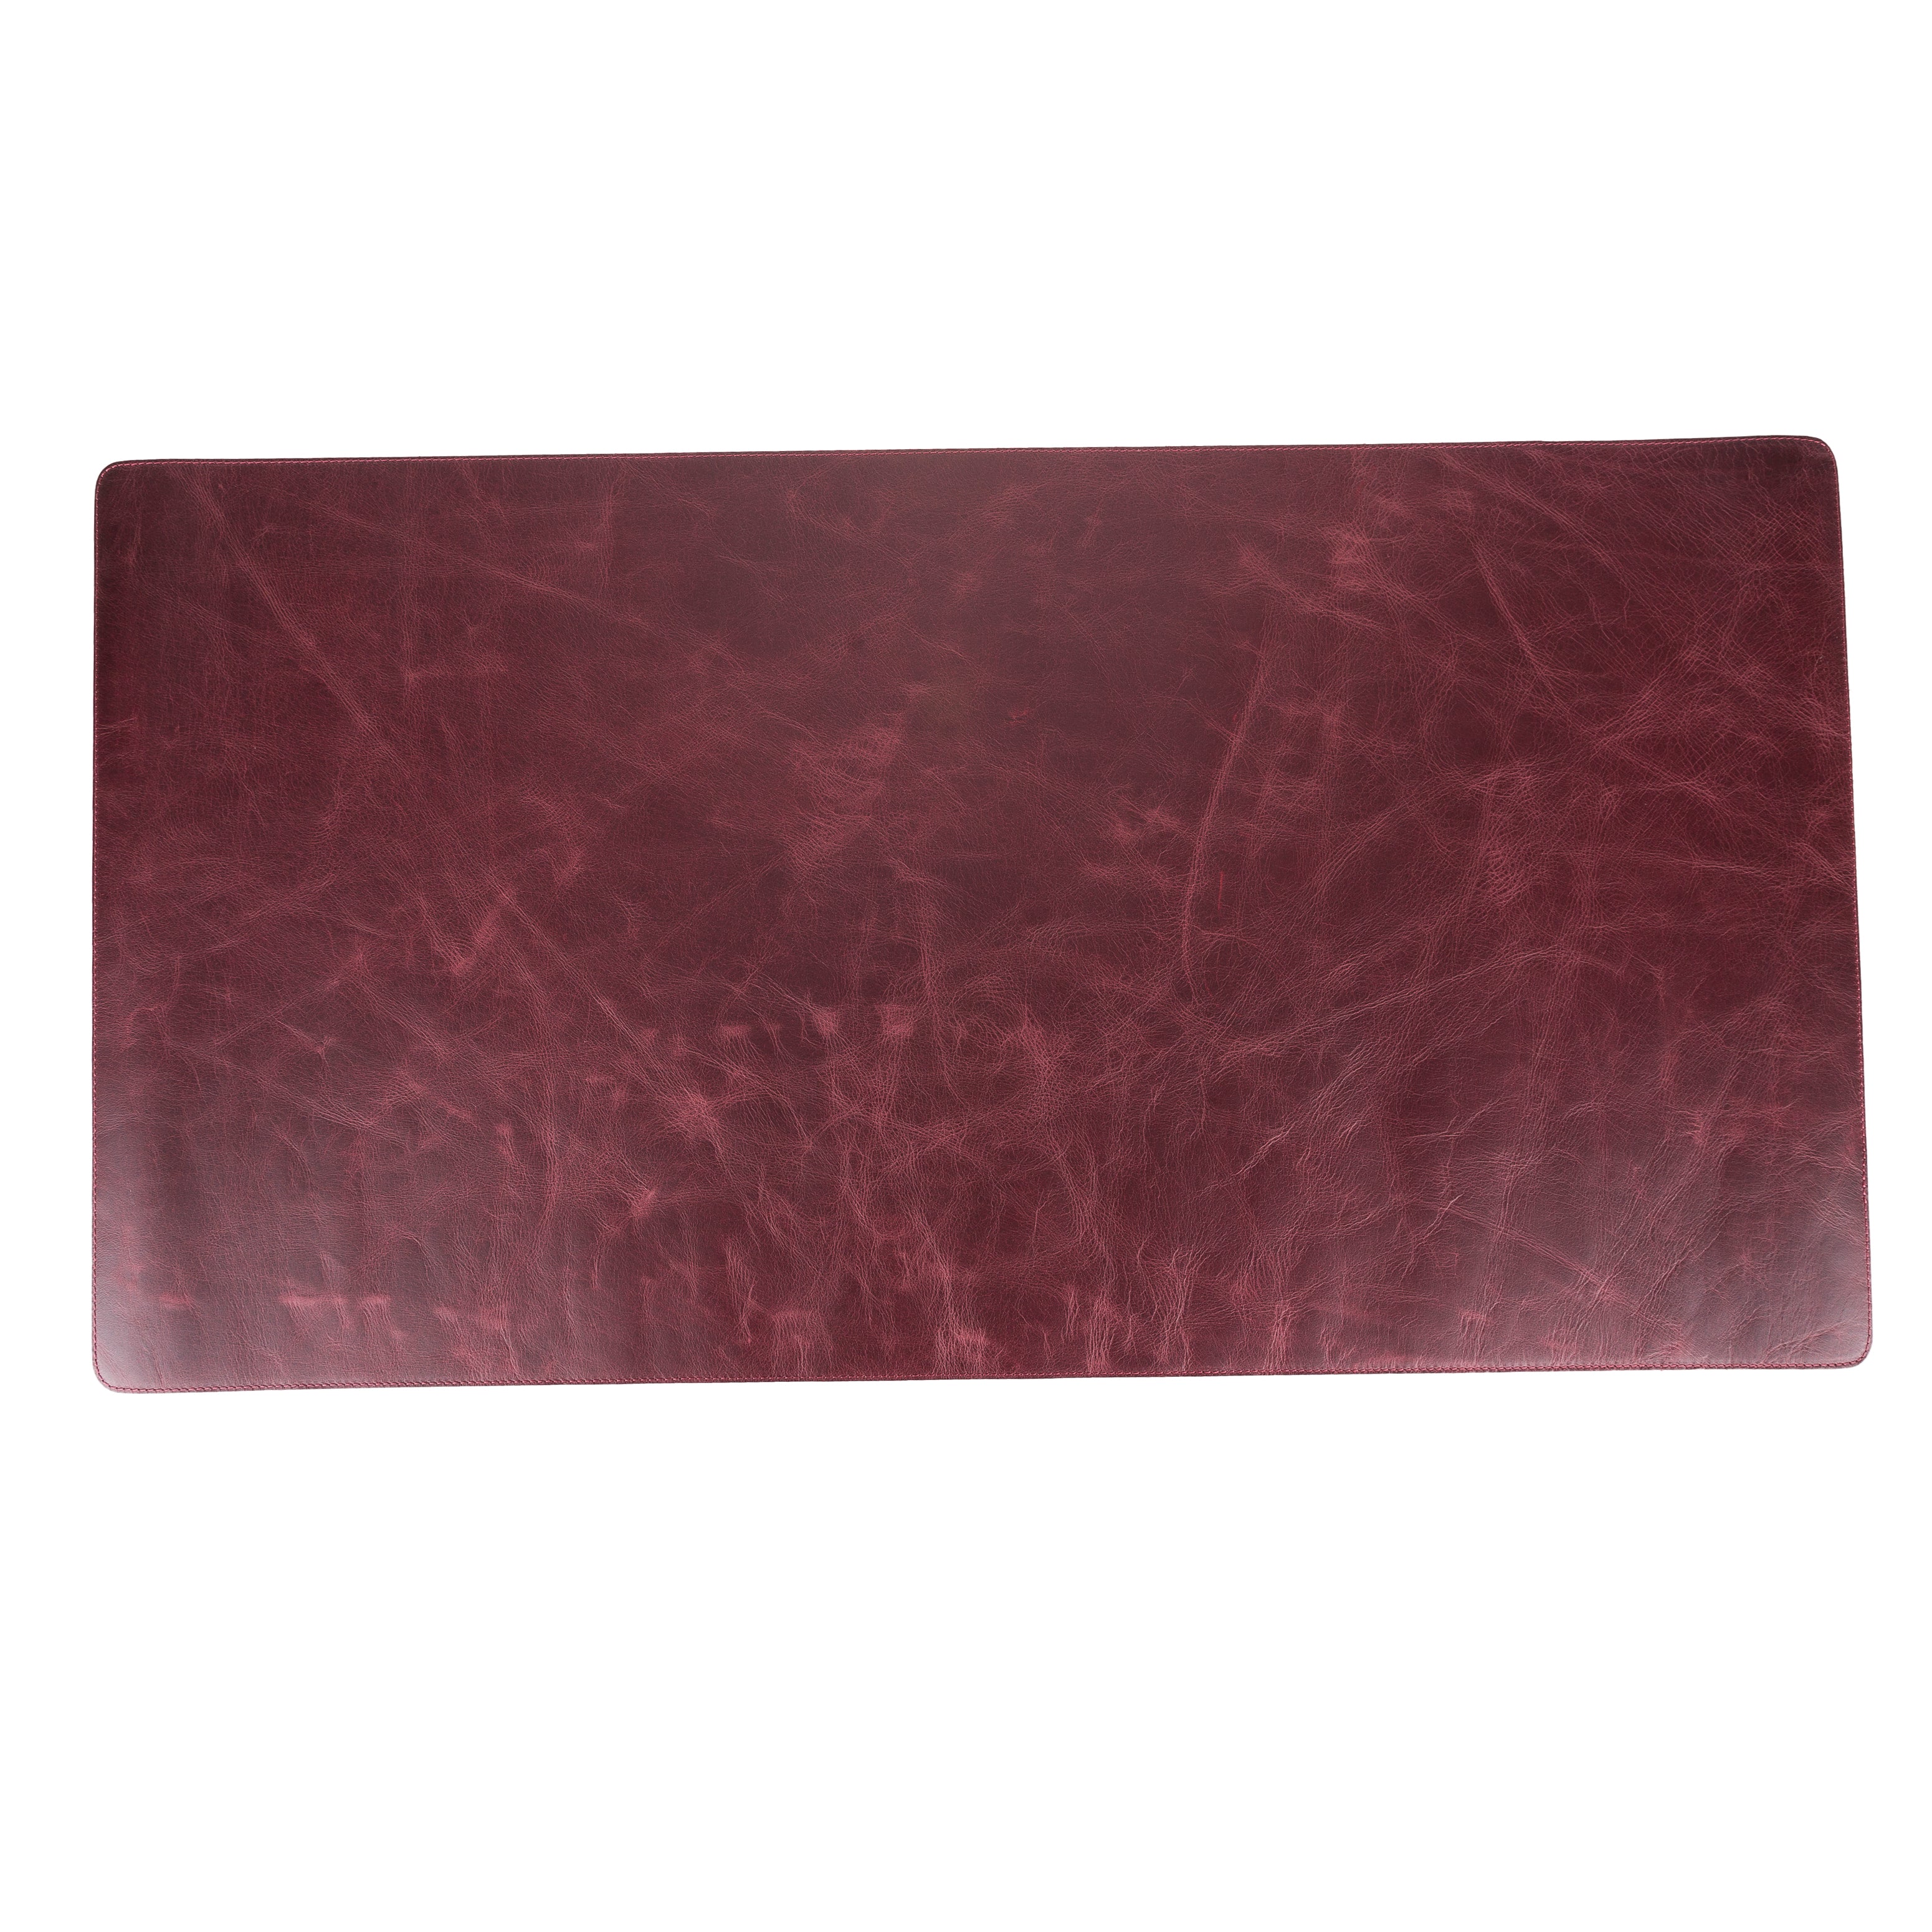 DelfiCase Genuine Cherry Leather Deskmat, Computer Pad, Office Desk Pad 4